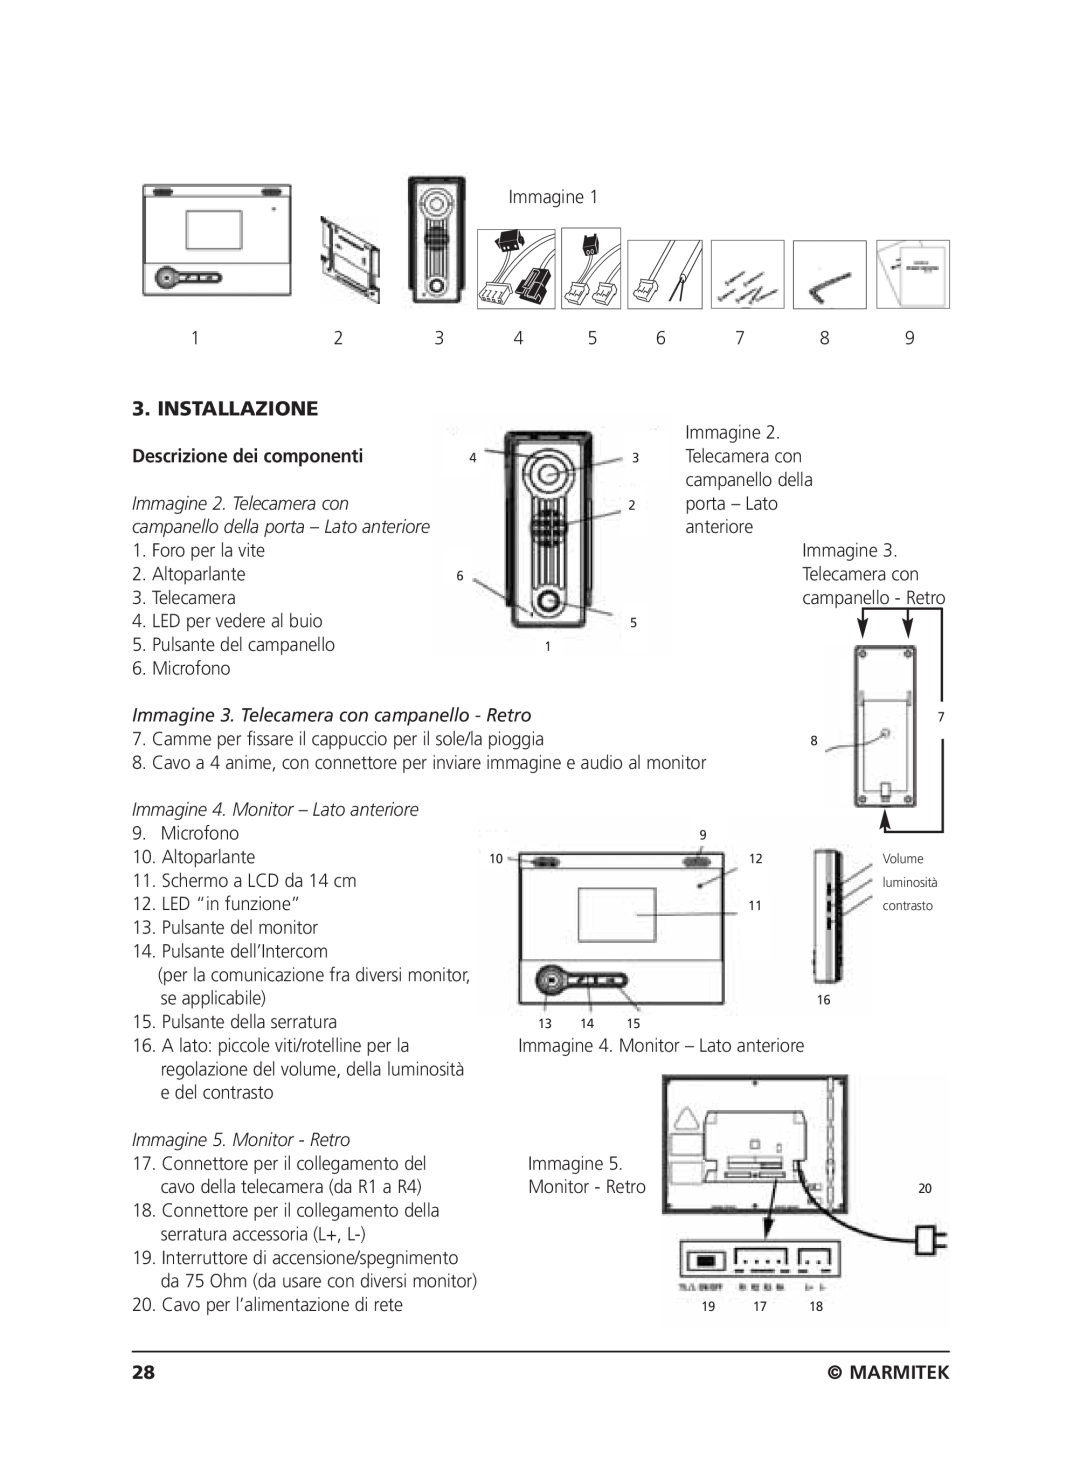 Marmitek VIDEO DOORPHONE user manual Installazione, Descrizione dei componenti, Marmitek 